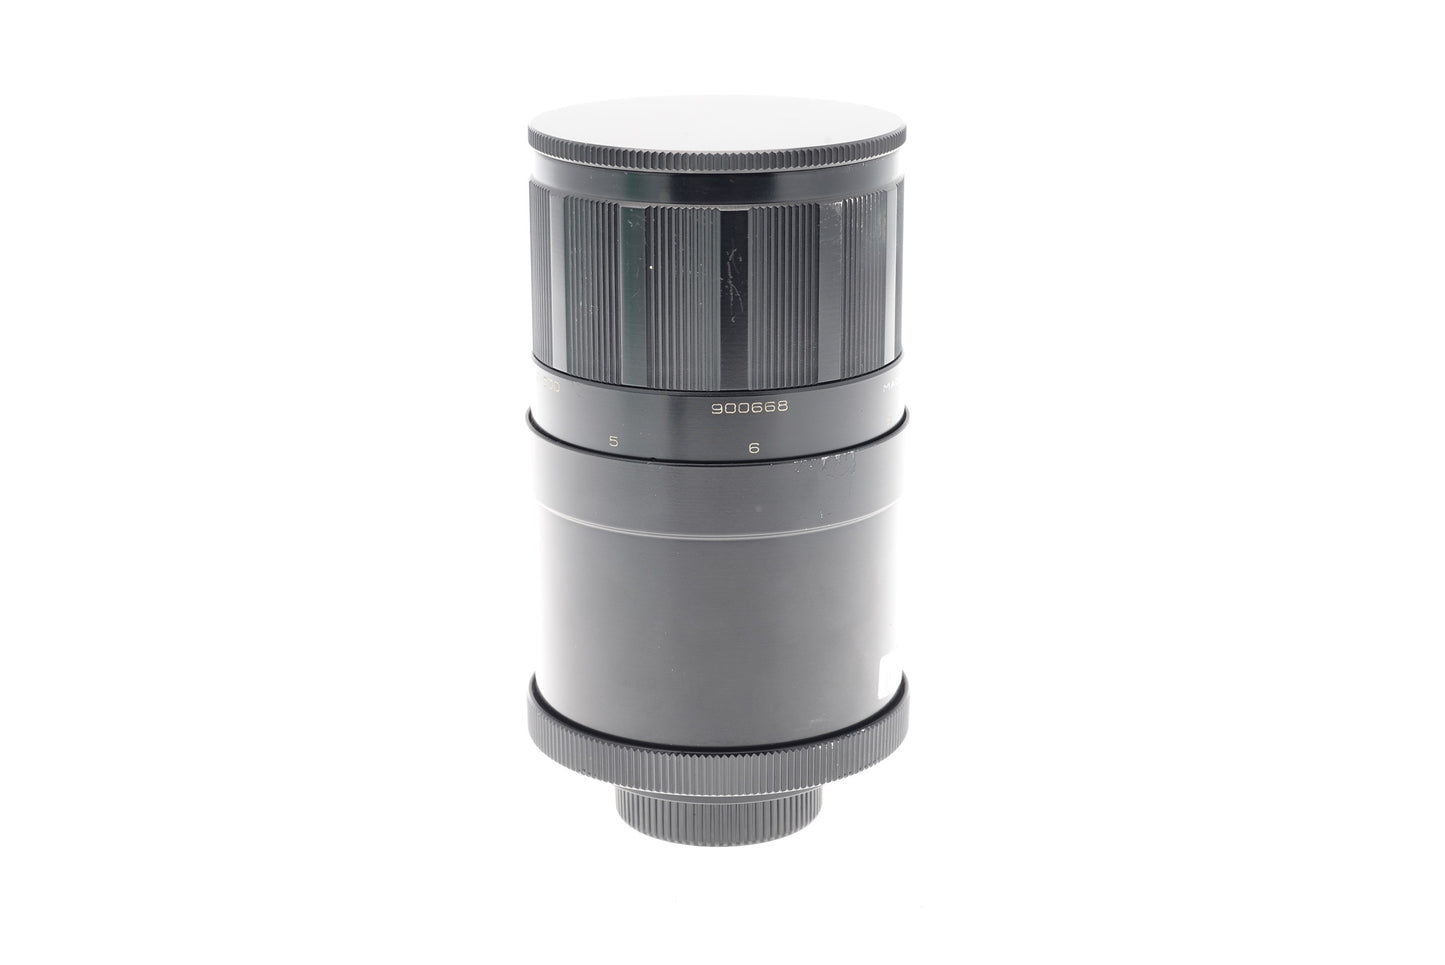 LZOS 500mm f8 3M-5CA MC - Lens